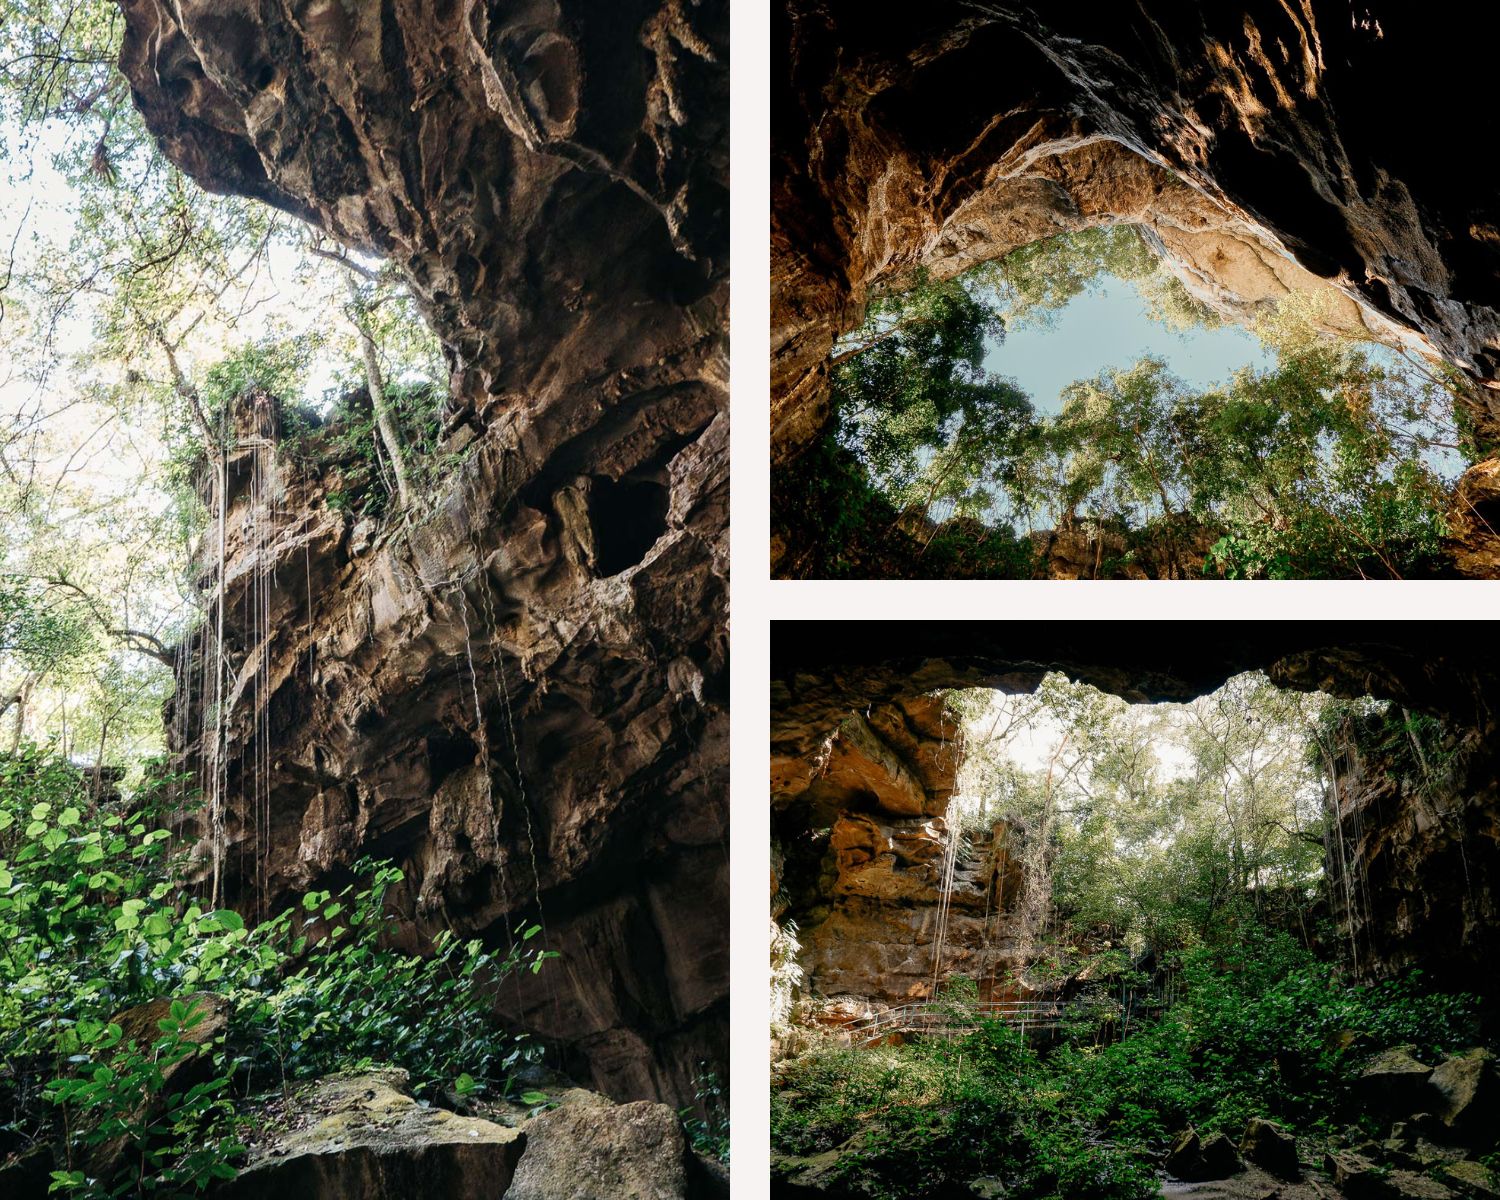 Cuevas de Mantetzulel, impressive caves lost in the nature